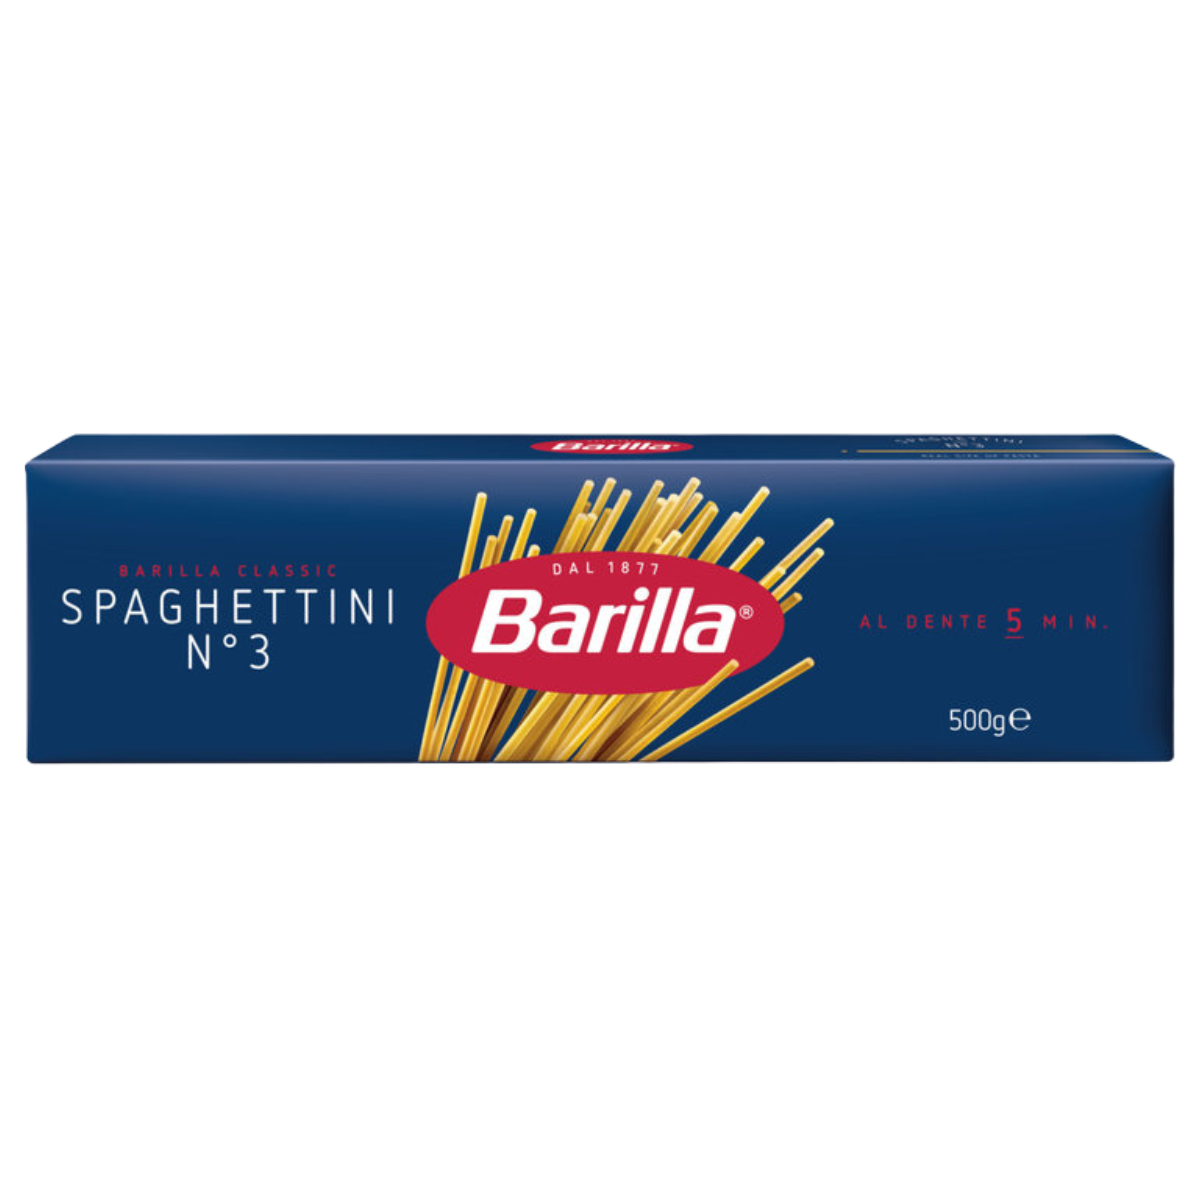 Pâtes Barilla Spaghettini 500g